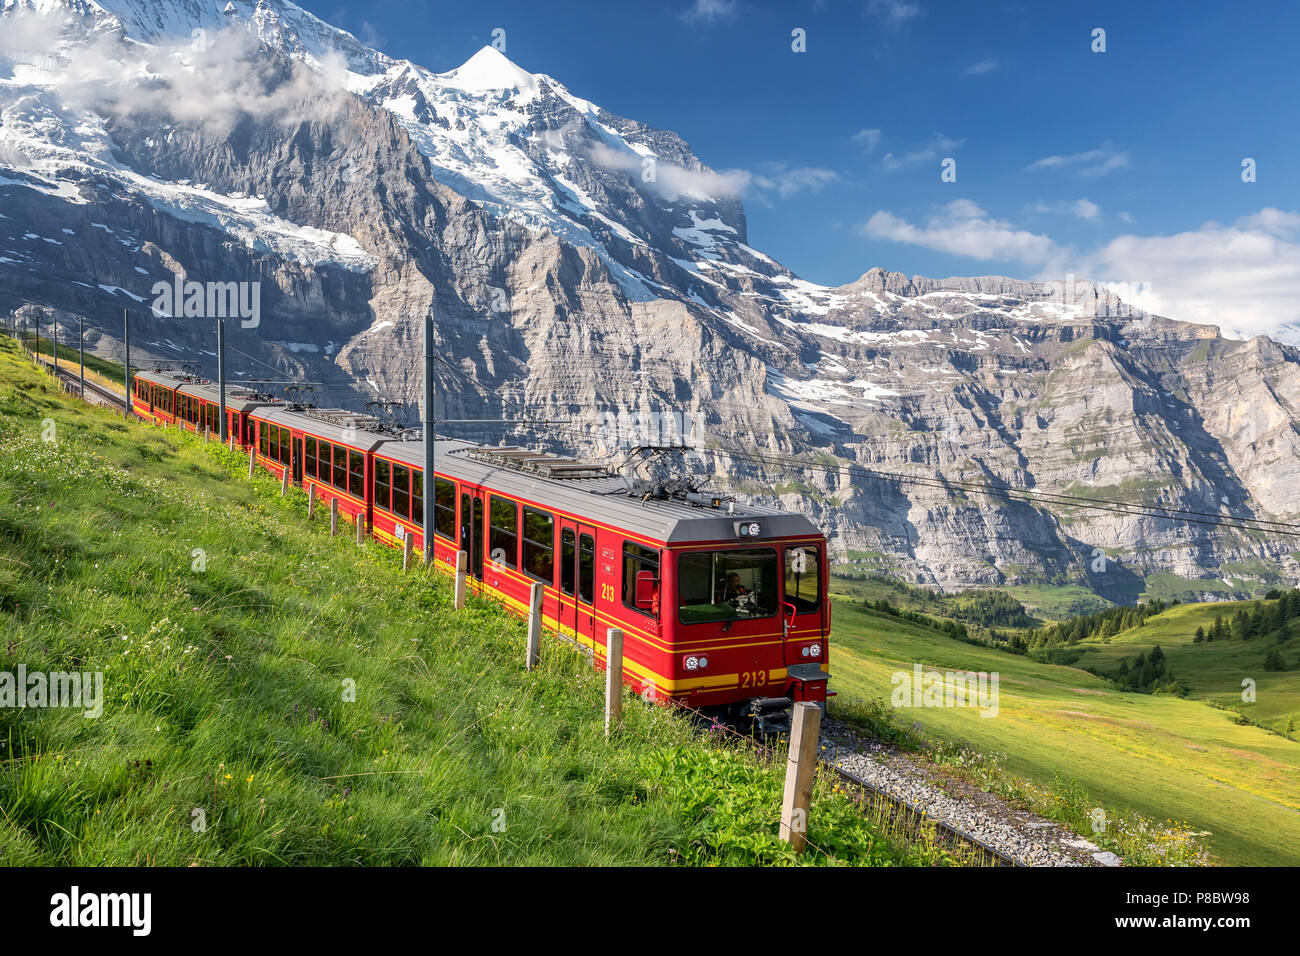 Train from the Jungfrau railway near Kleine Scheidegg, Bernese Oberland, Switzerland Stock Photo